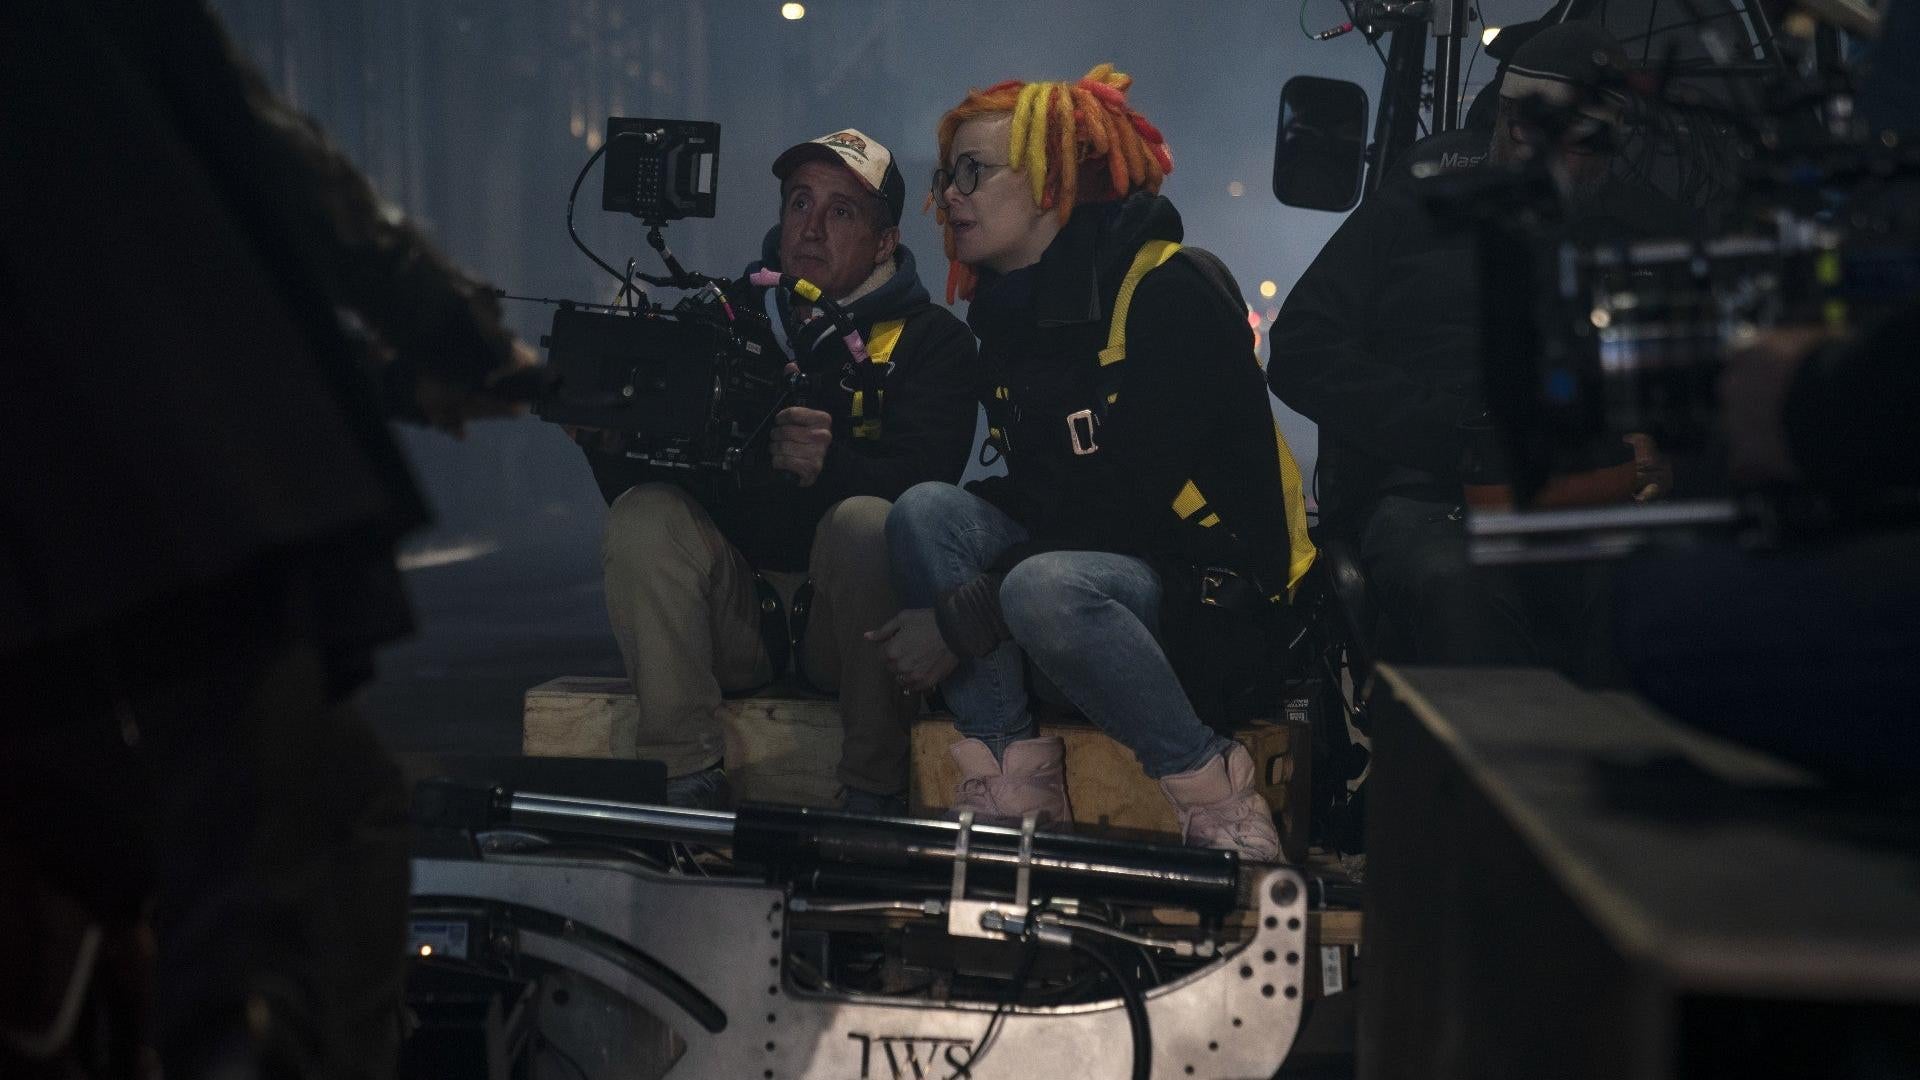 Lana Wachowski on set. (Image: Warner Bros.)